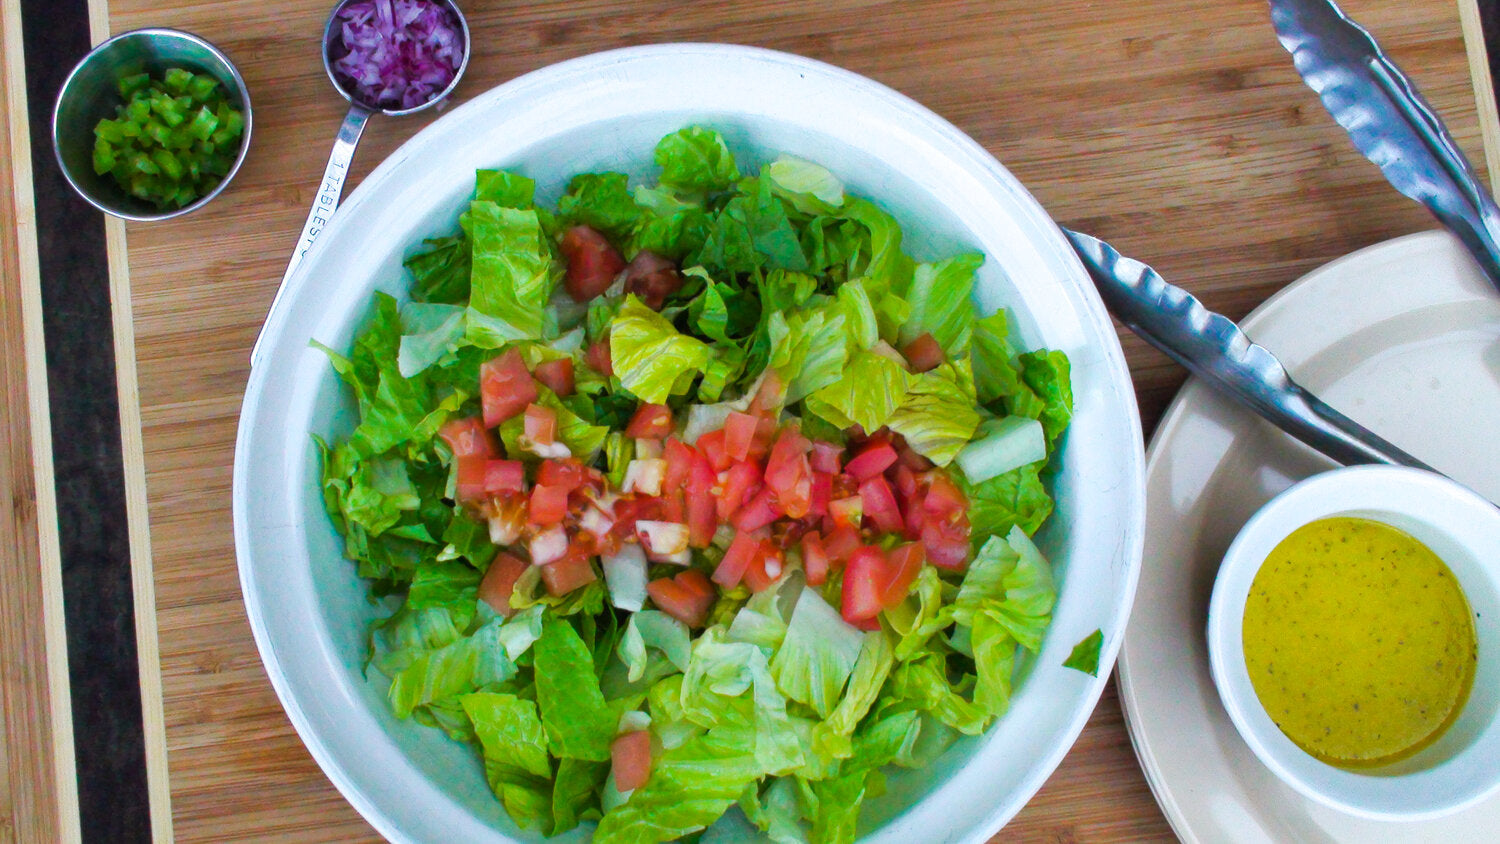 How To Prepare an "Ethiopian Salad